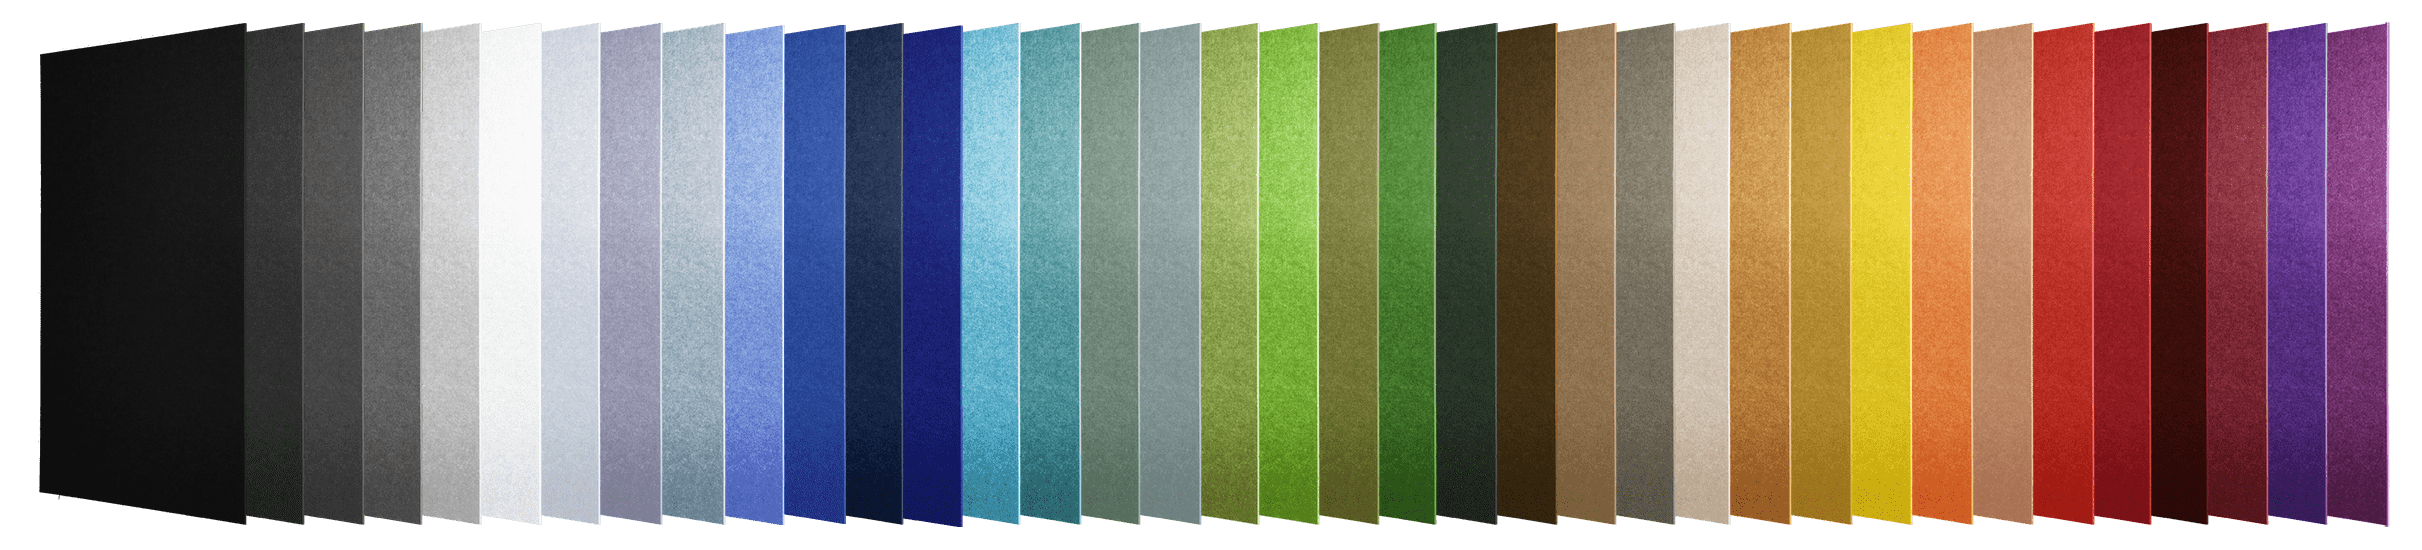 petfelt panelen 37 kleuren